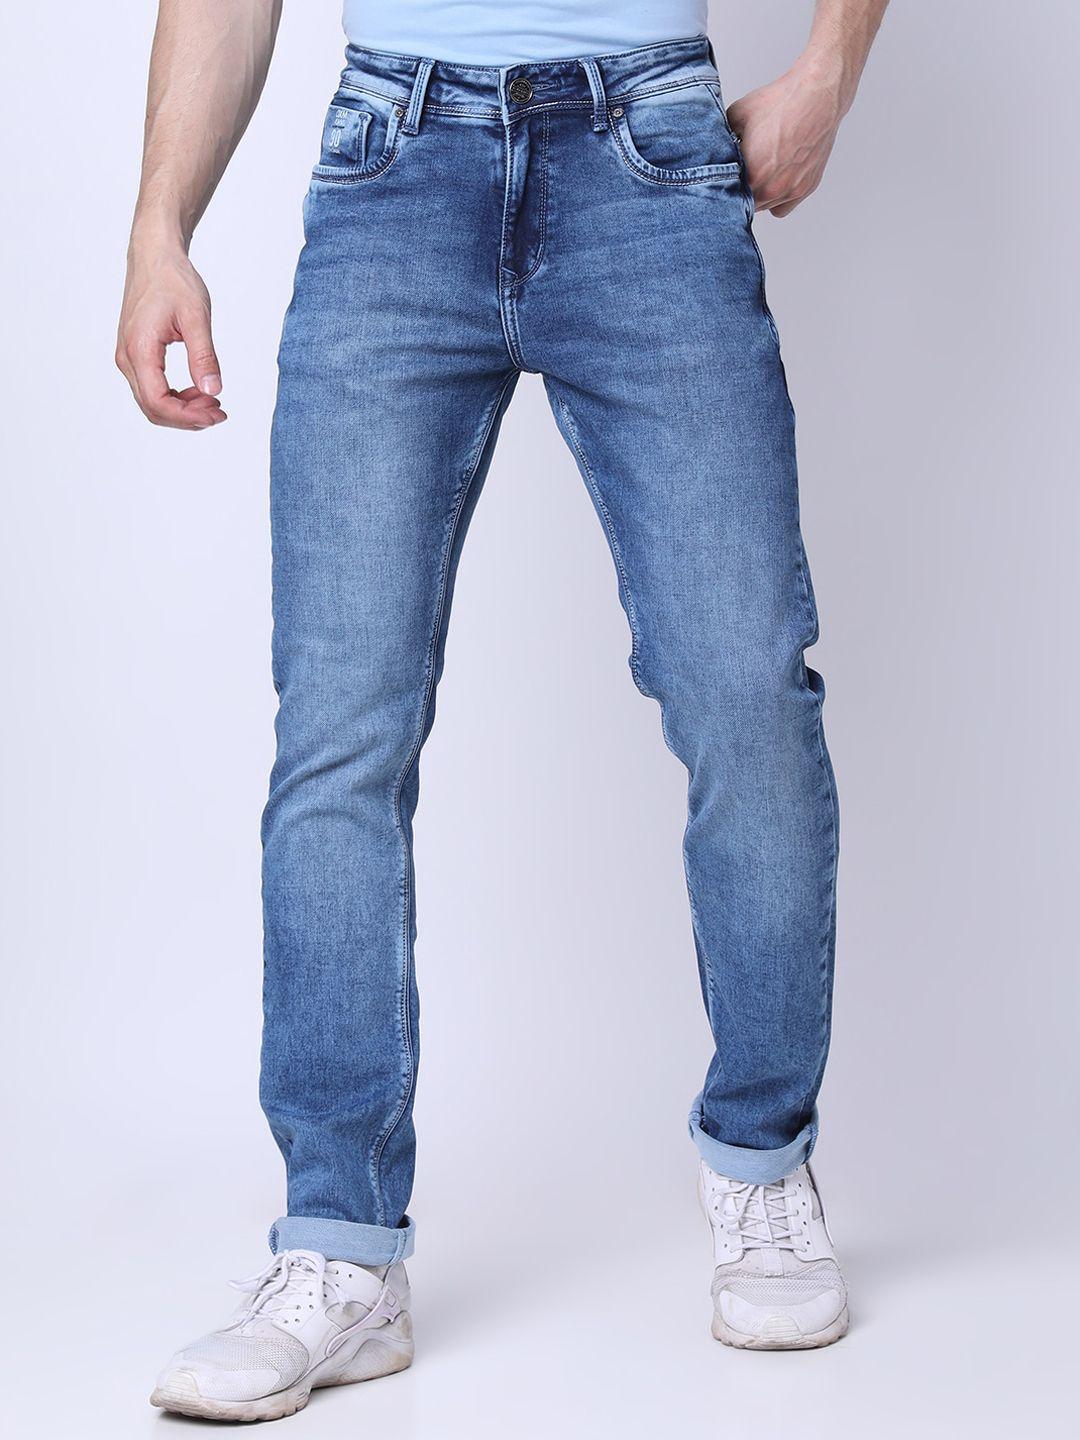 oxemberg-men-lean-slim-fit-heavy-fade-clean-look-jeans